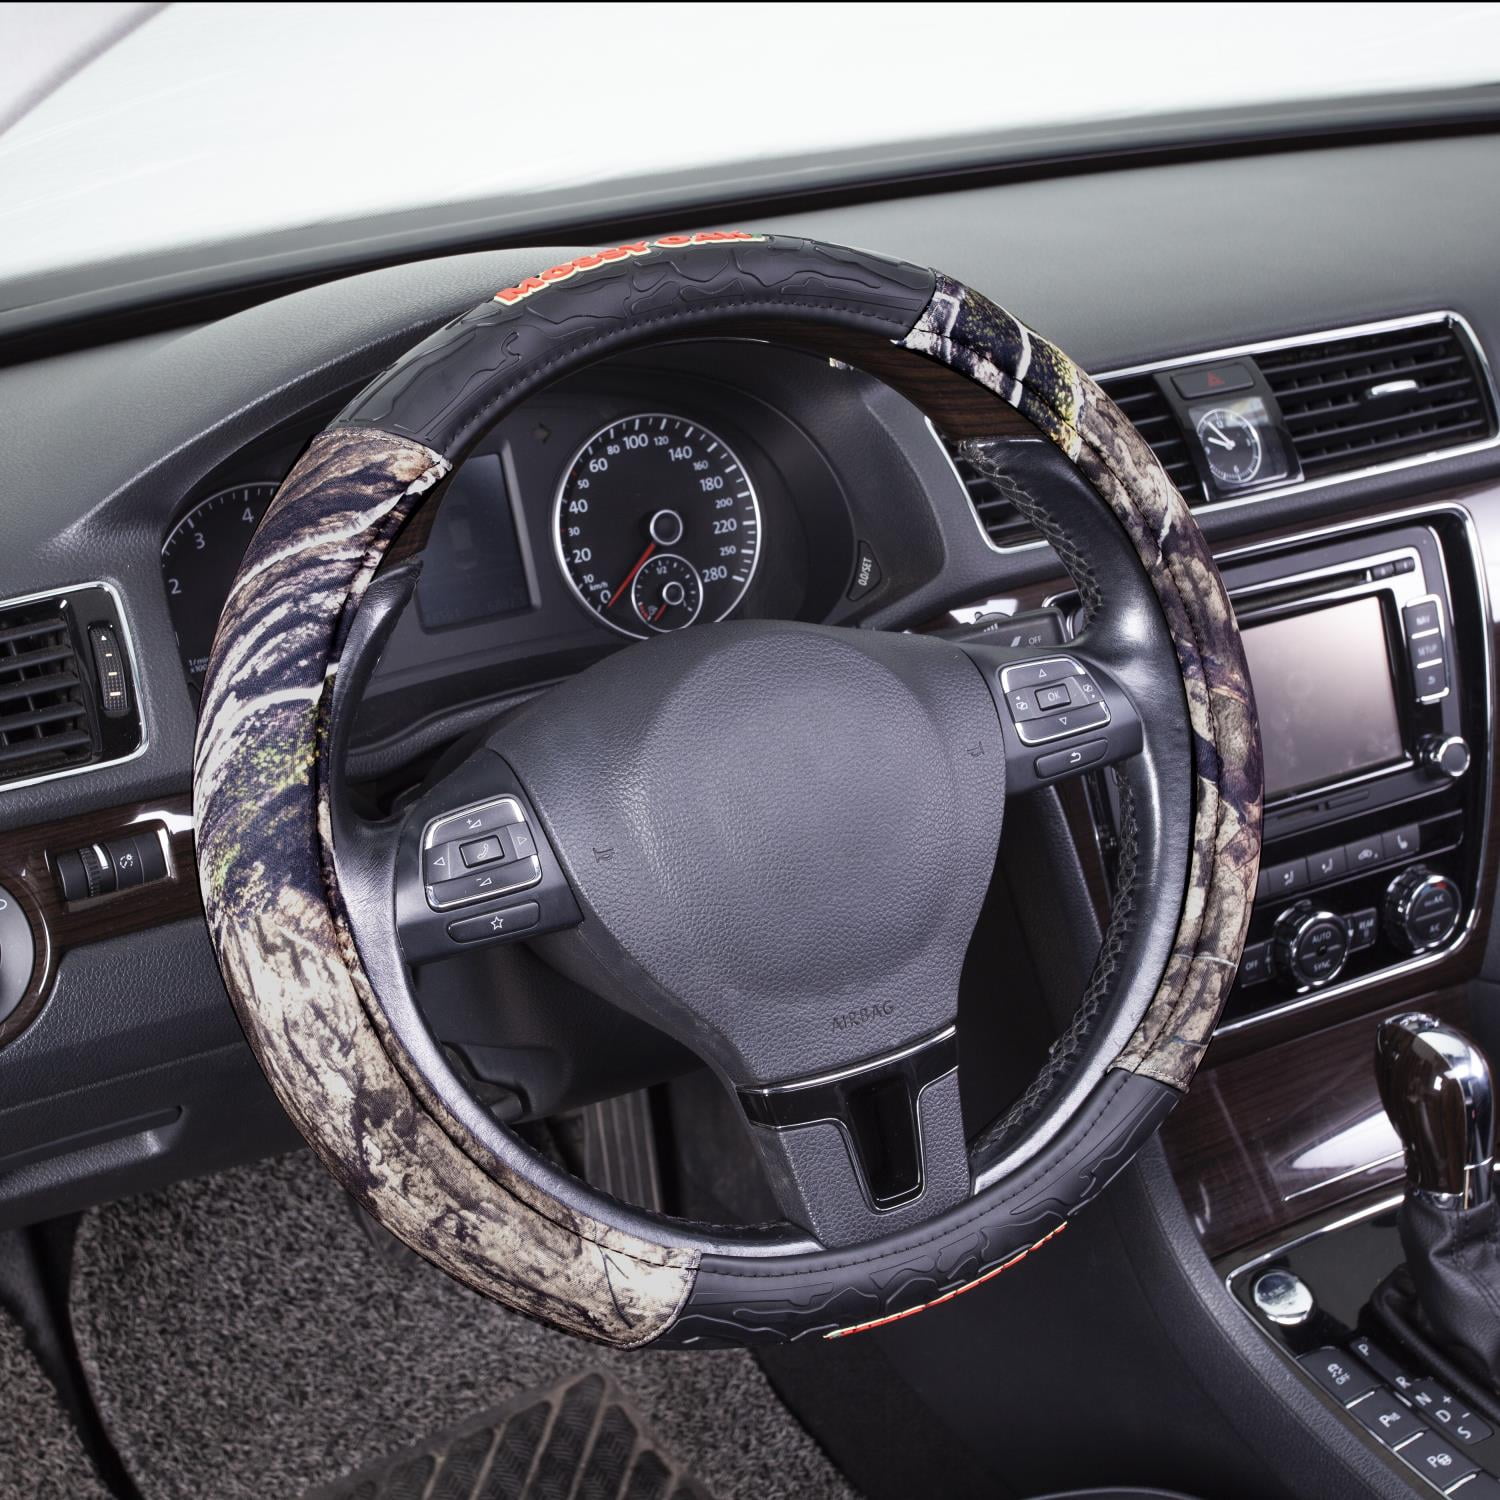 AutoDrive Heavy Duty Truck Steering Wheel Cover Universal Fit 21SWC75 - Mossy Oak Camo - 1 Pieces